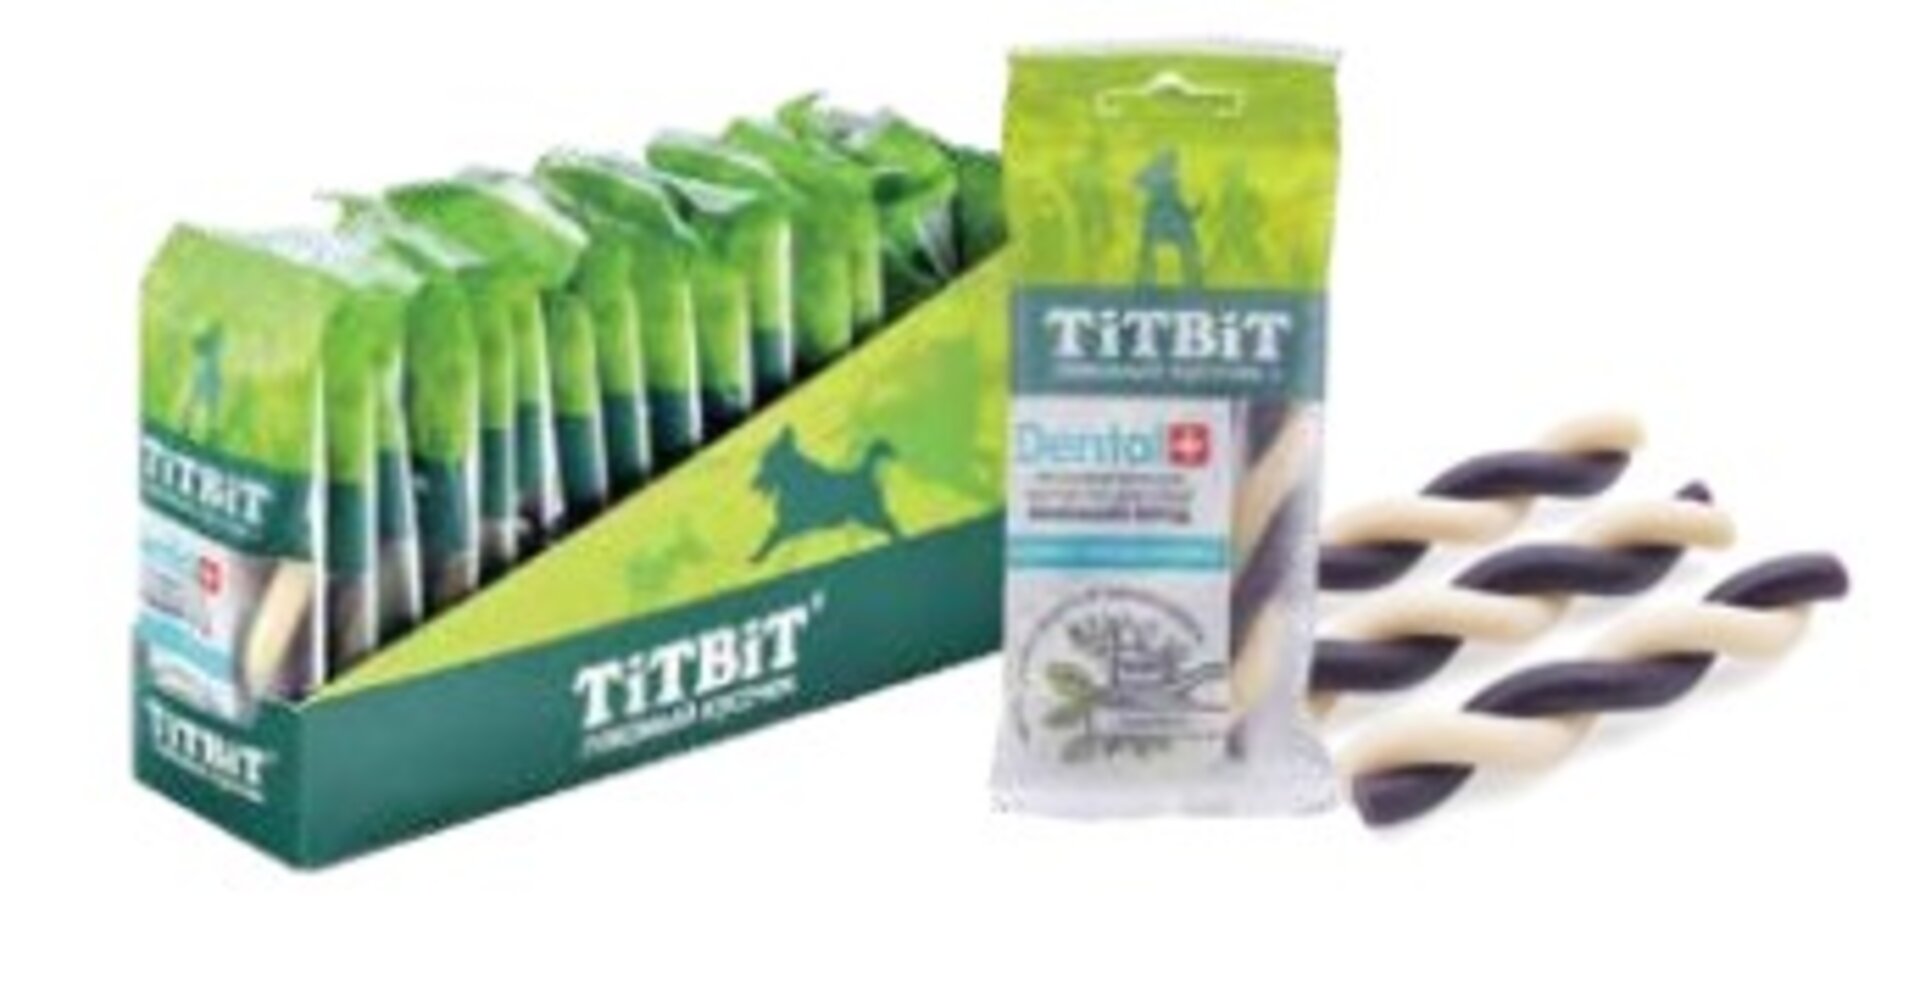 TiTBiT ტიტბიტი - პროფილაქტიკური სასუსნაო  DENTAL+ ძაღლებისთვის